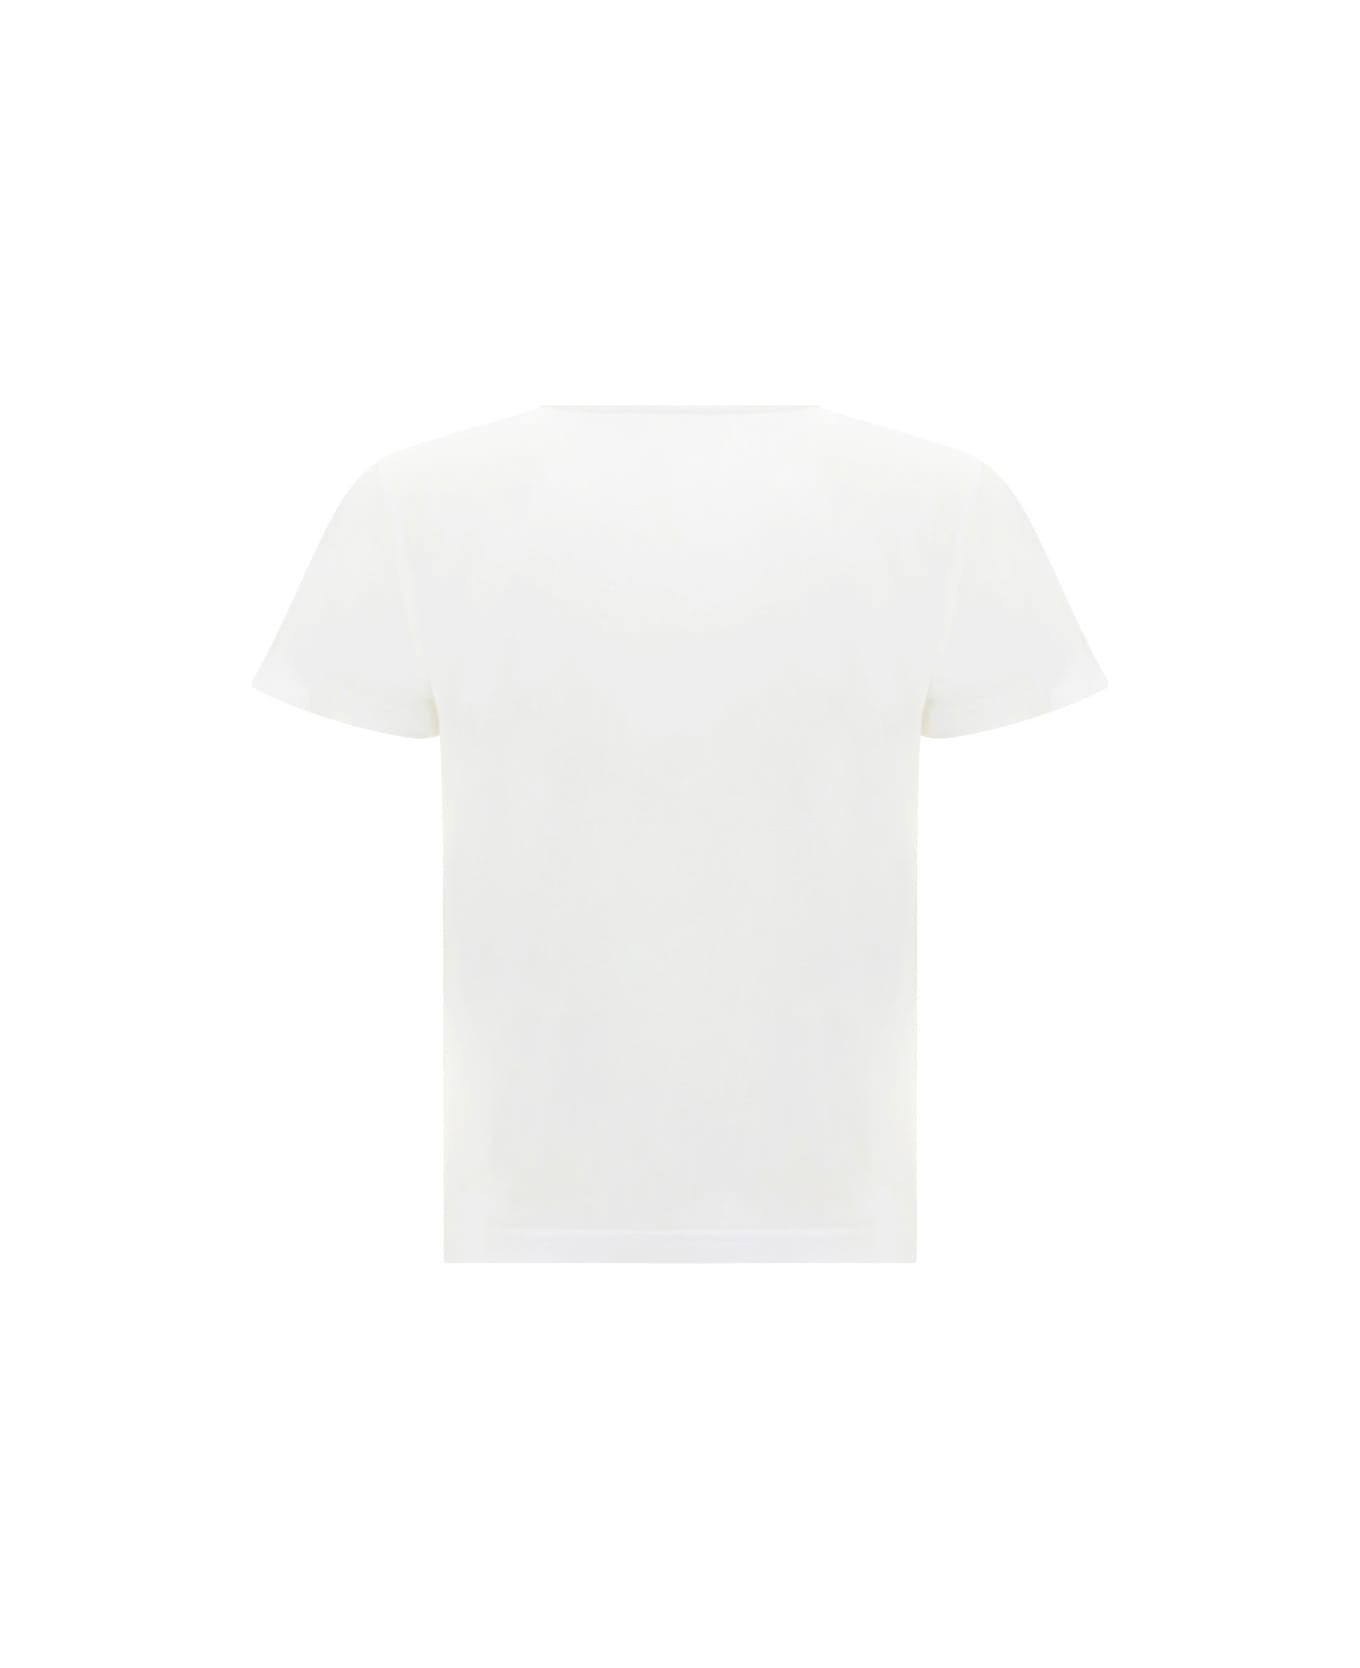 Alexander Wang T-shirt - White Tシャツ